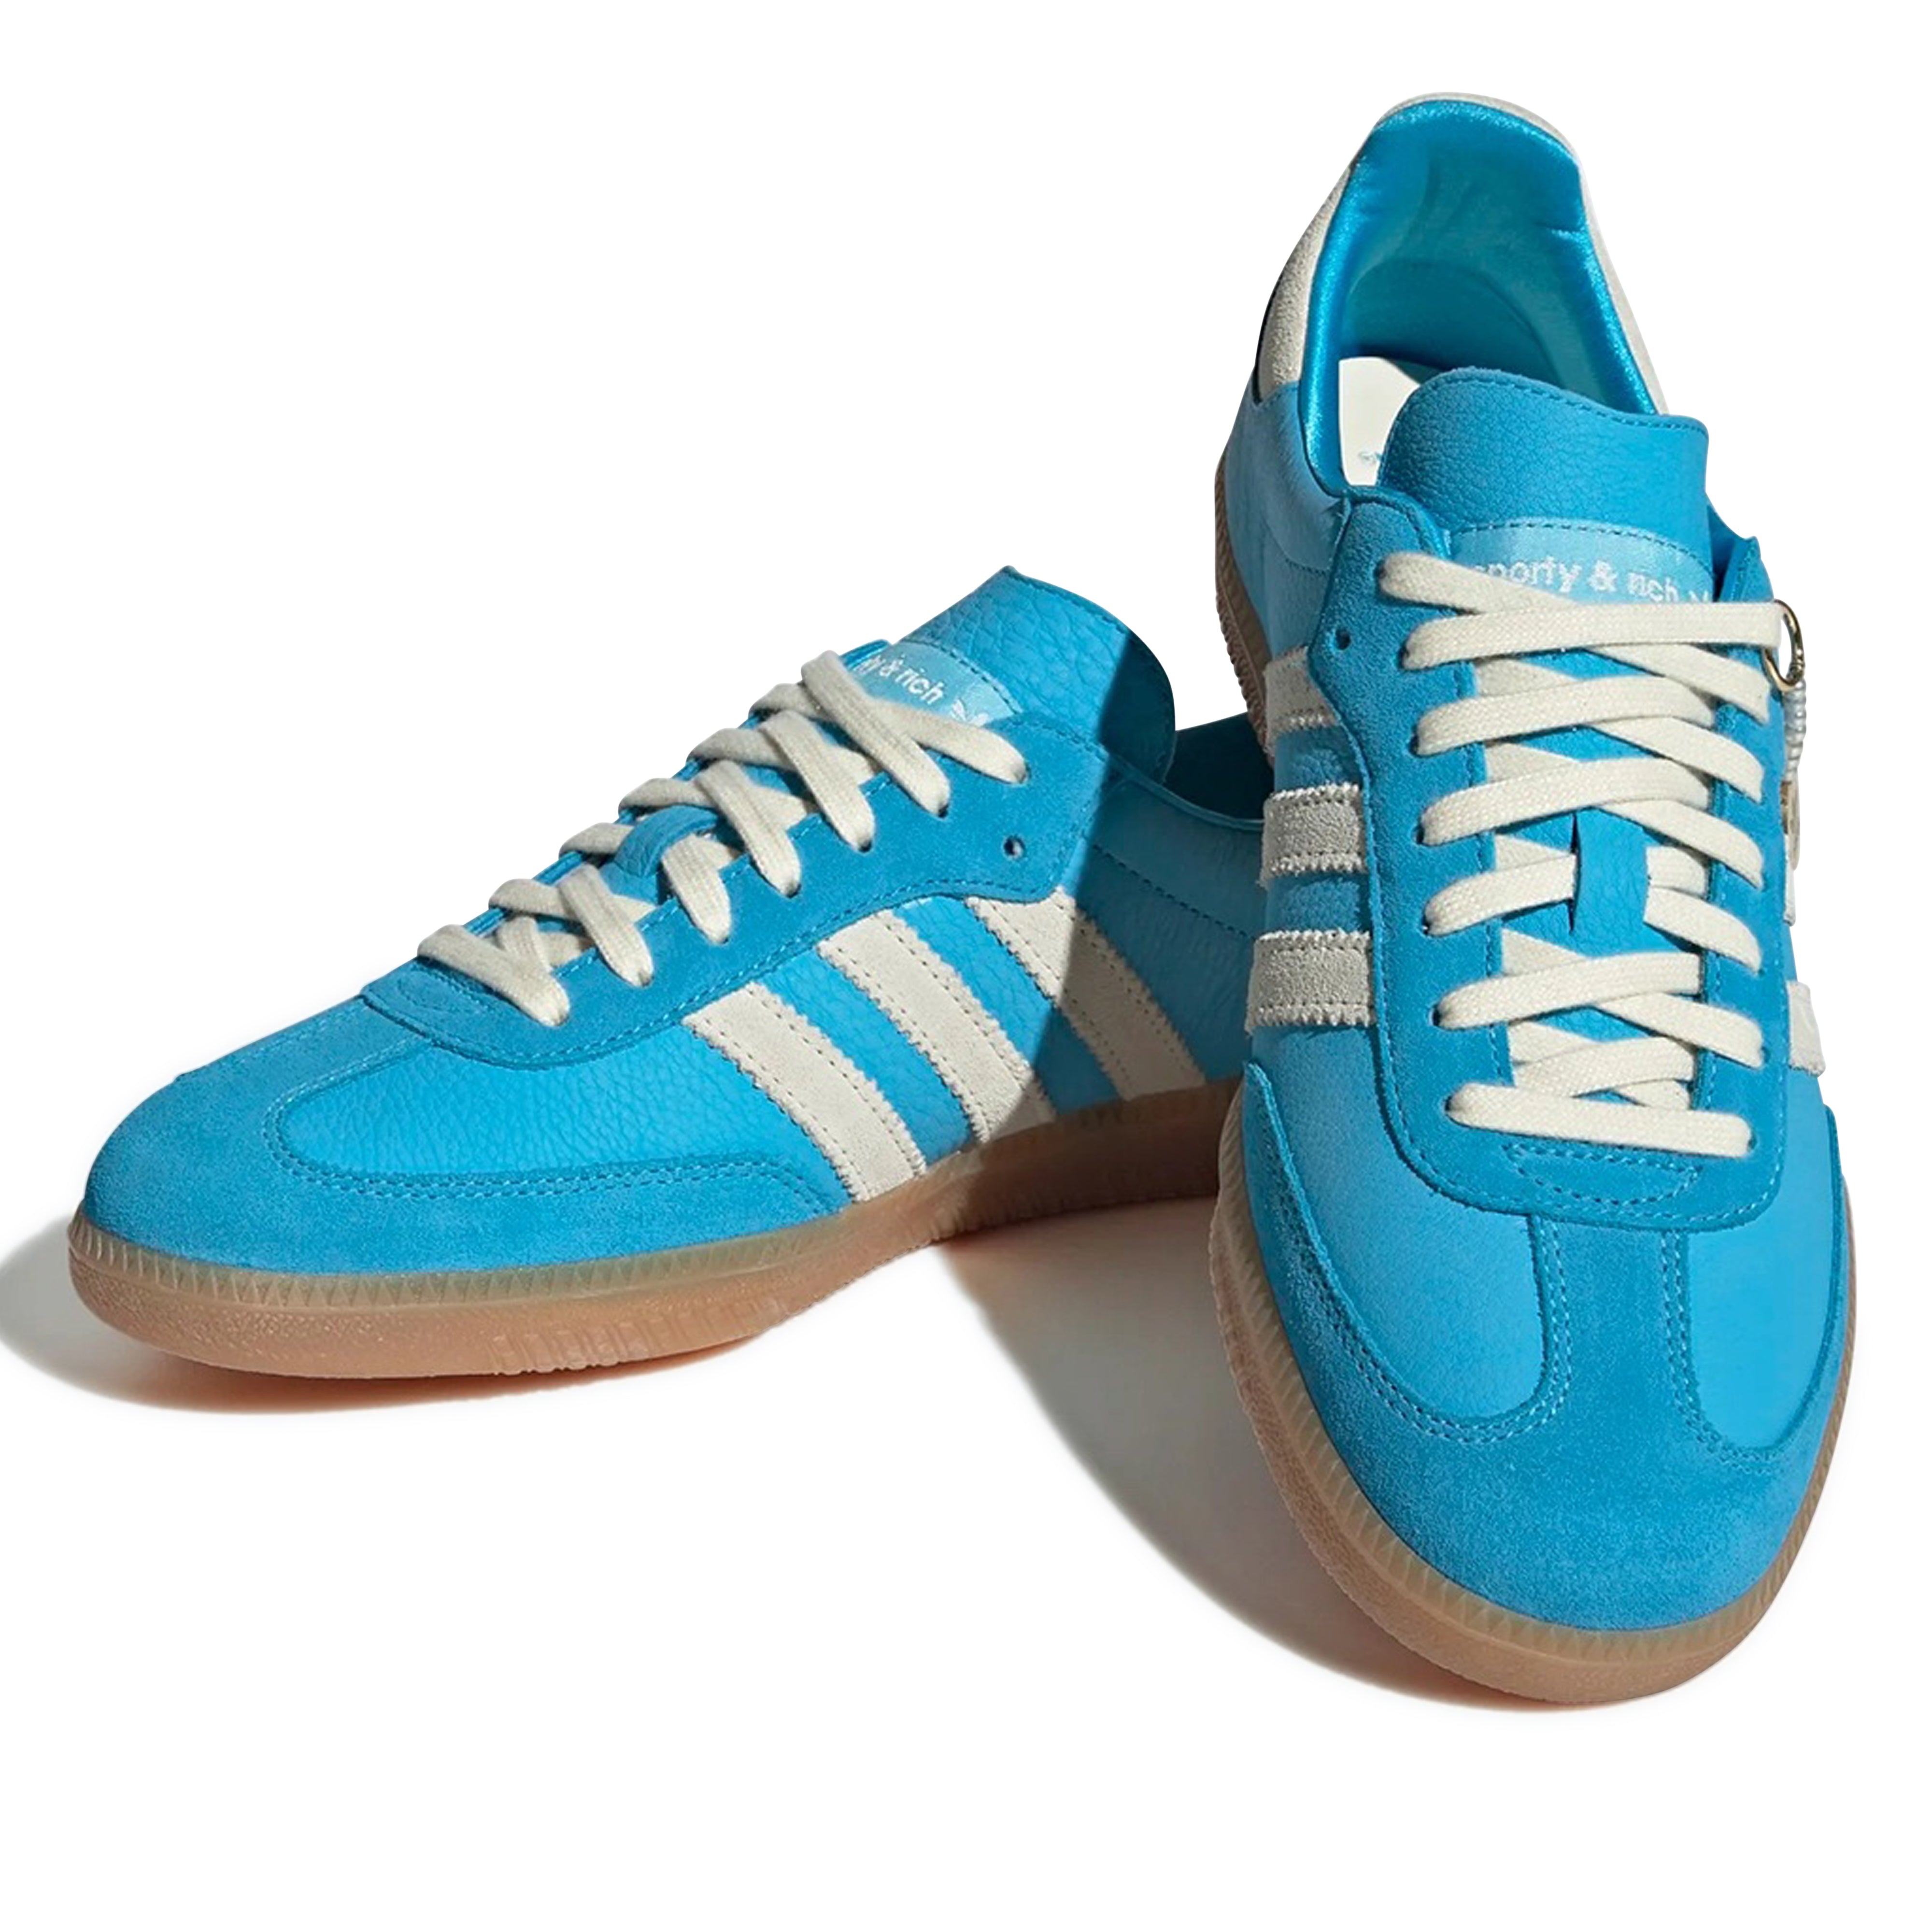 Adidas - Samba OG Sporty & Rich - (Light Blue)